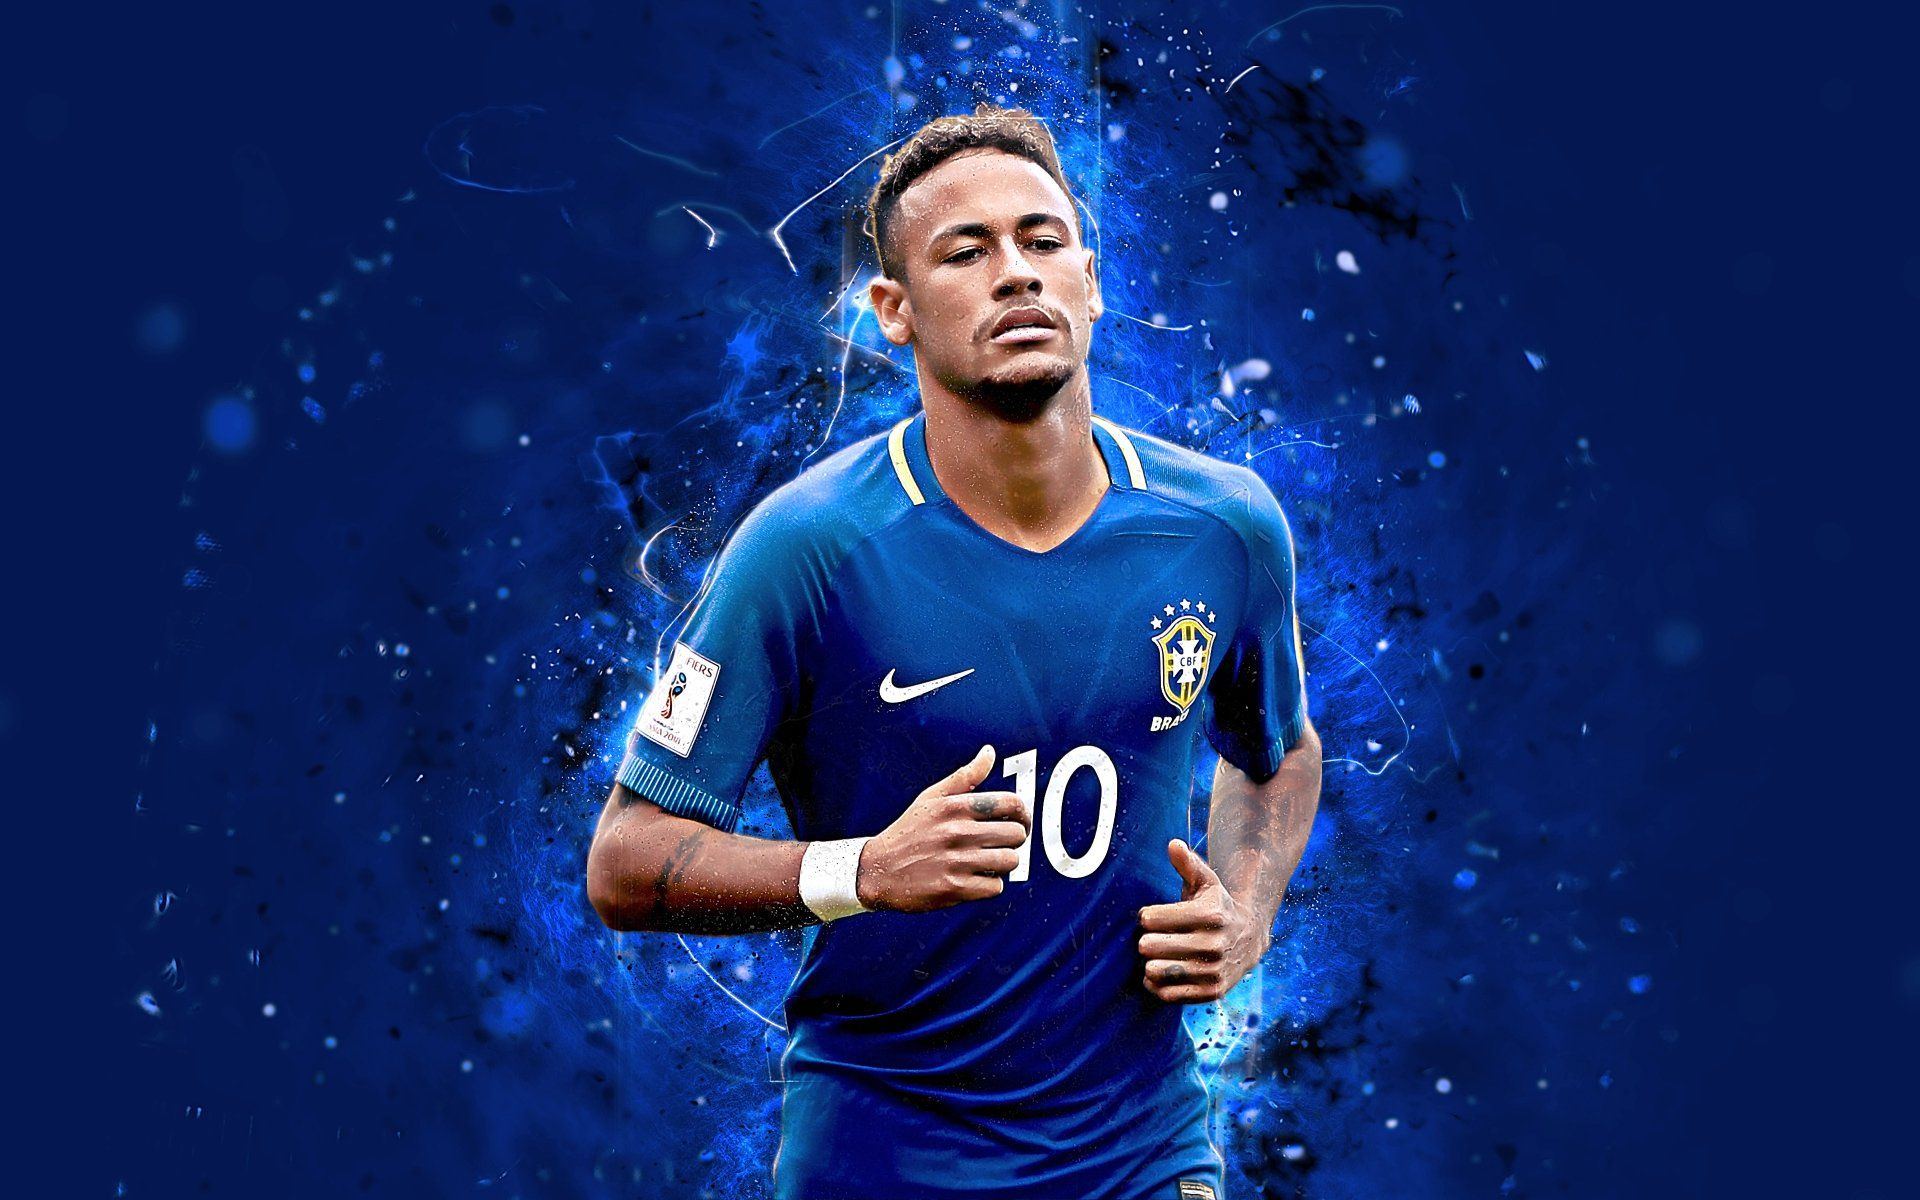 4K Ultra HD Neymar Wallpaper and Background Image